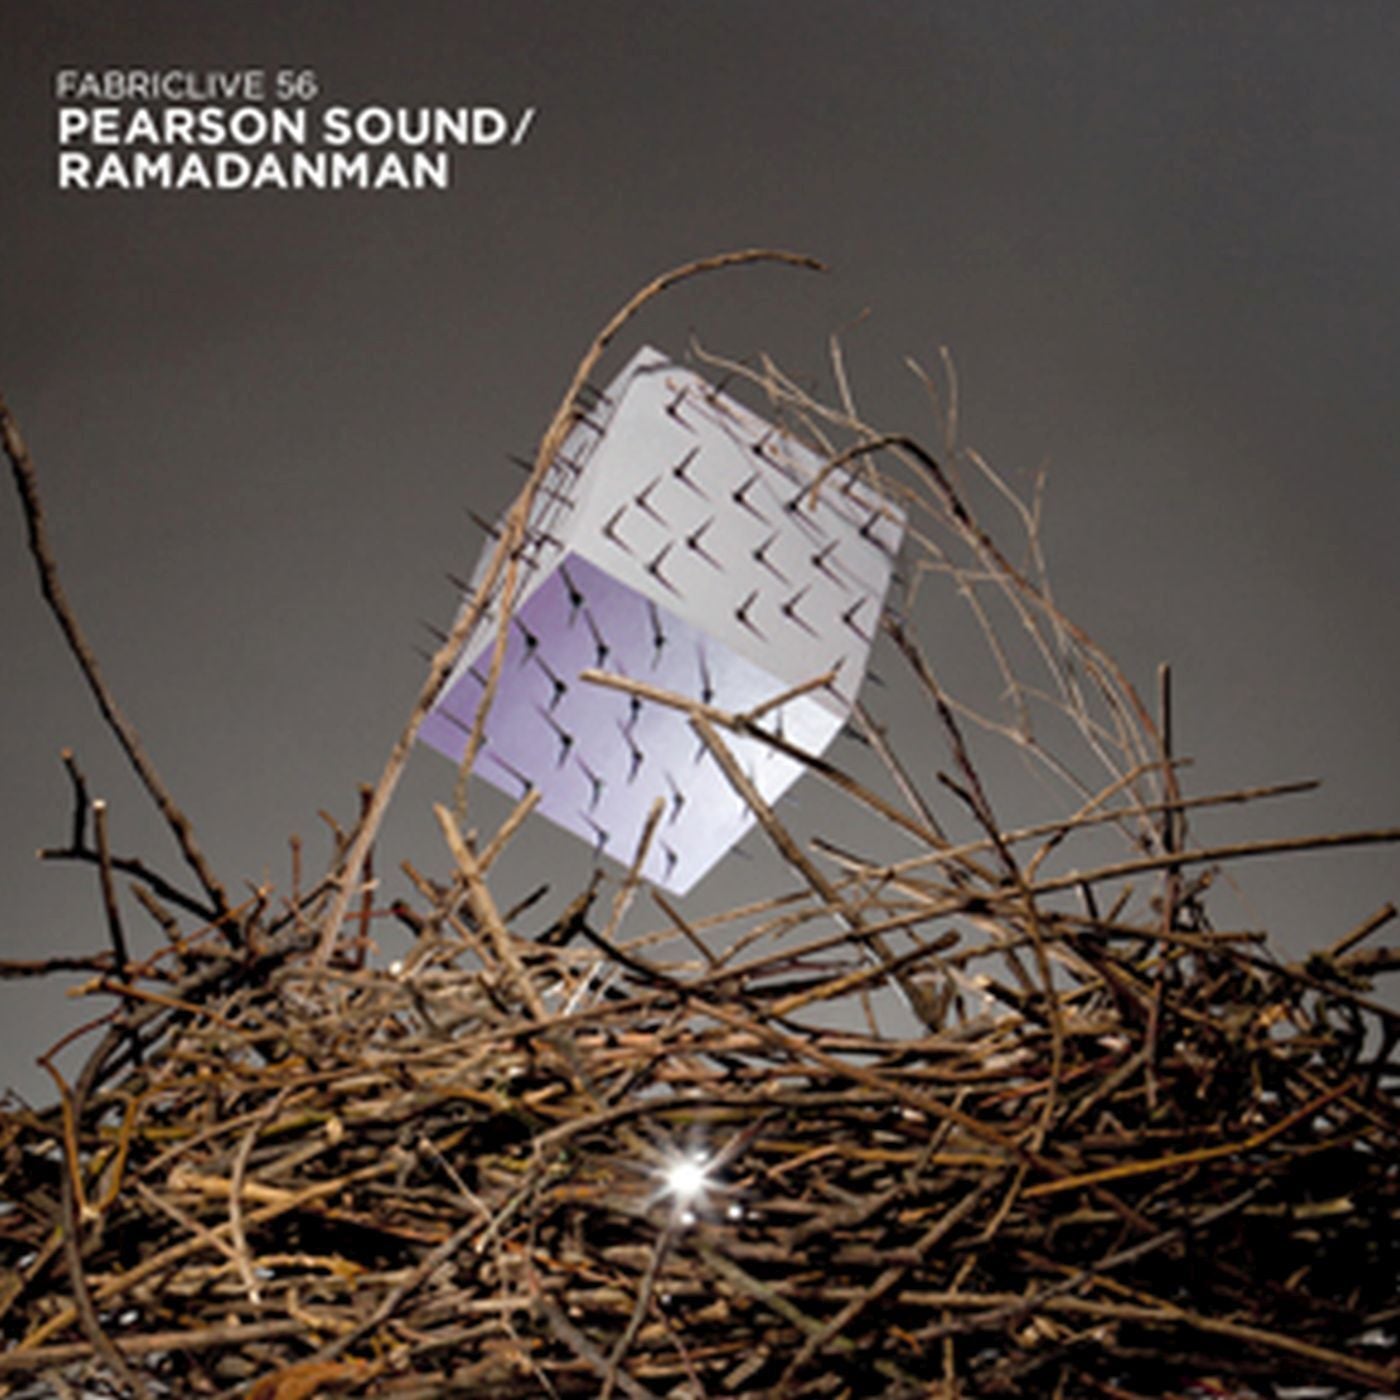 FABRICLIVE 56: Pearson Sound / Ramadanman